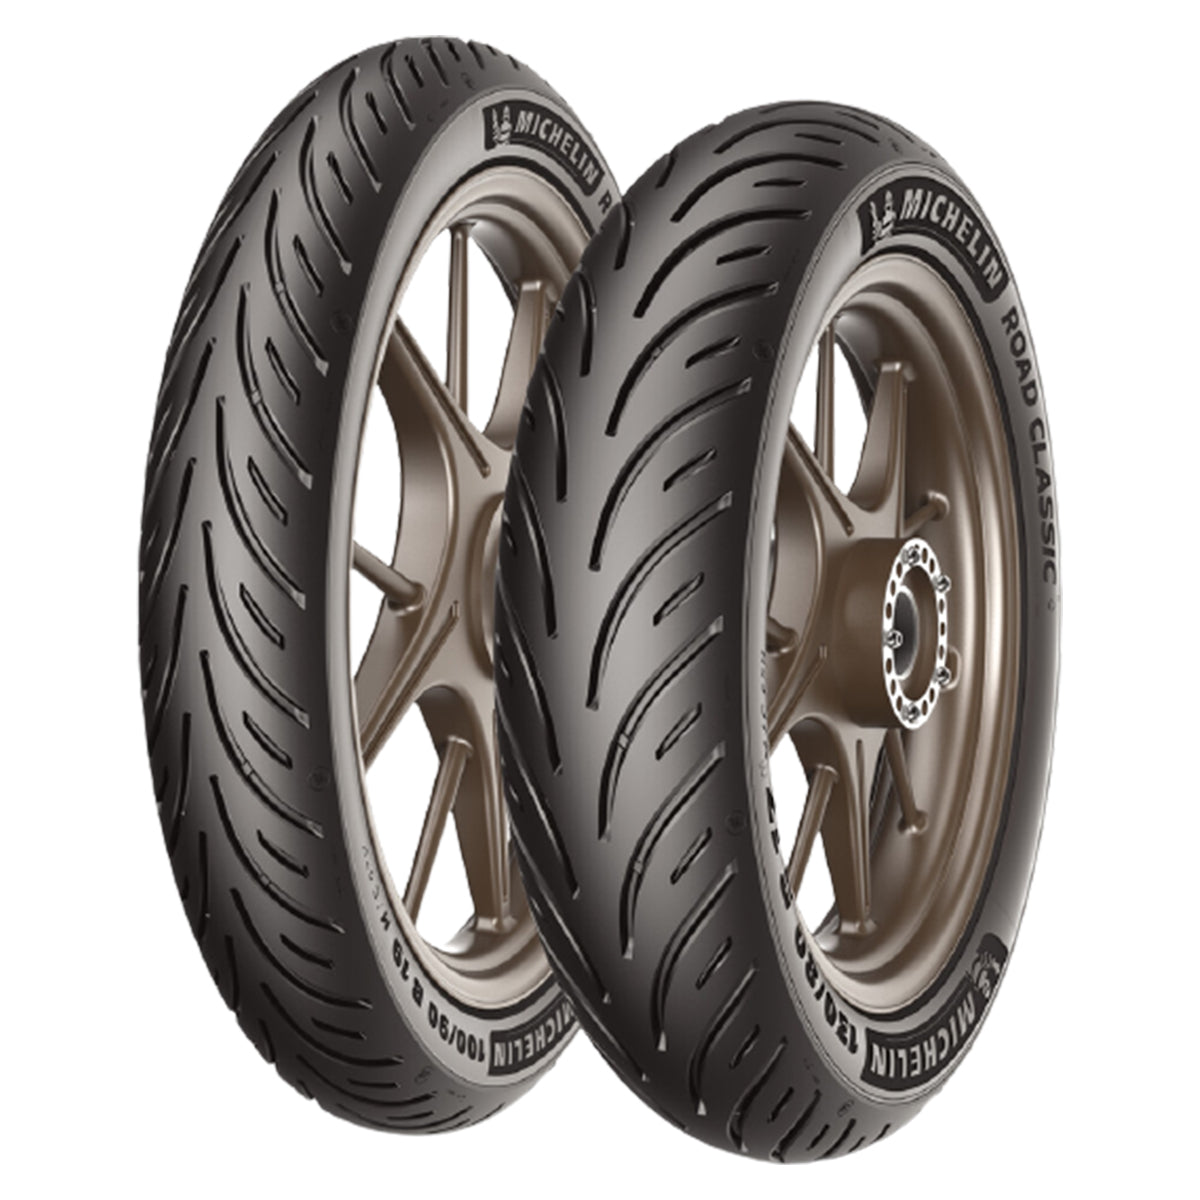 Michelin Road Classic 18" Rear Street Tires-0306